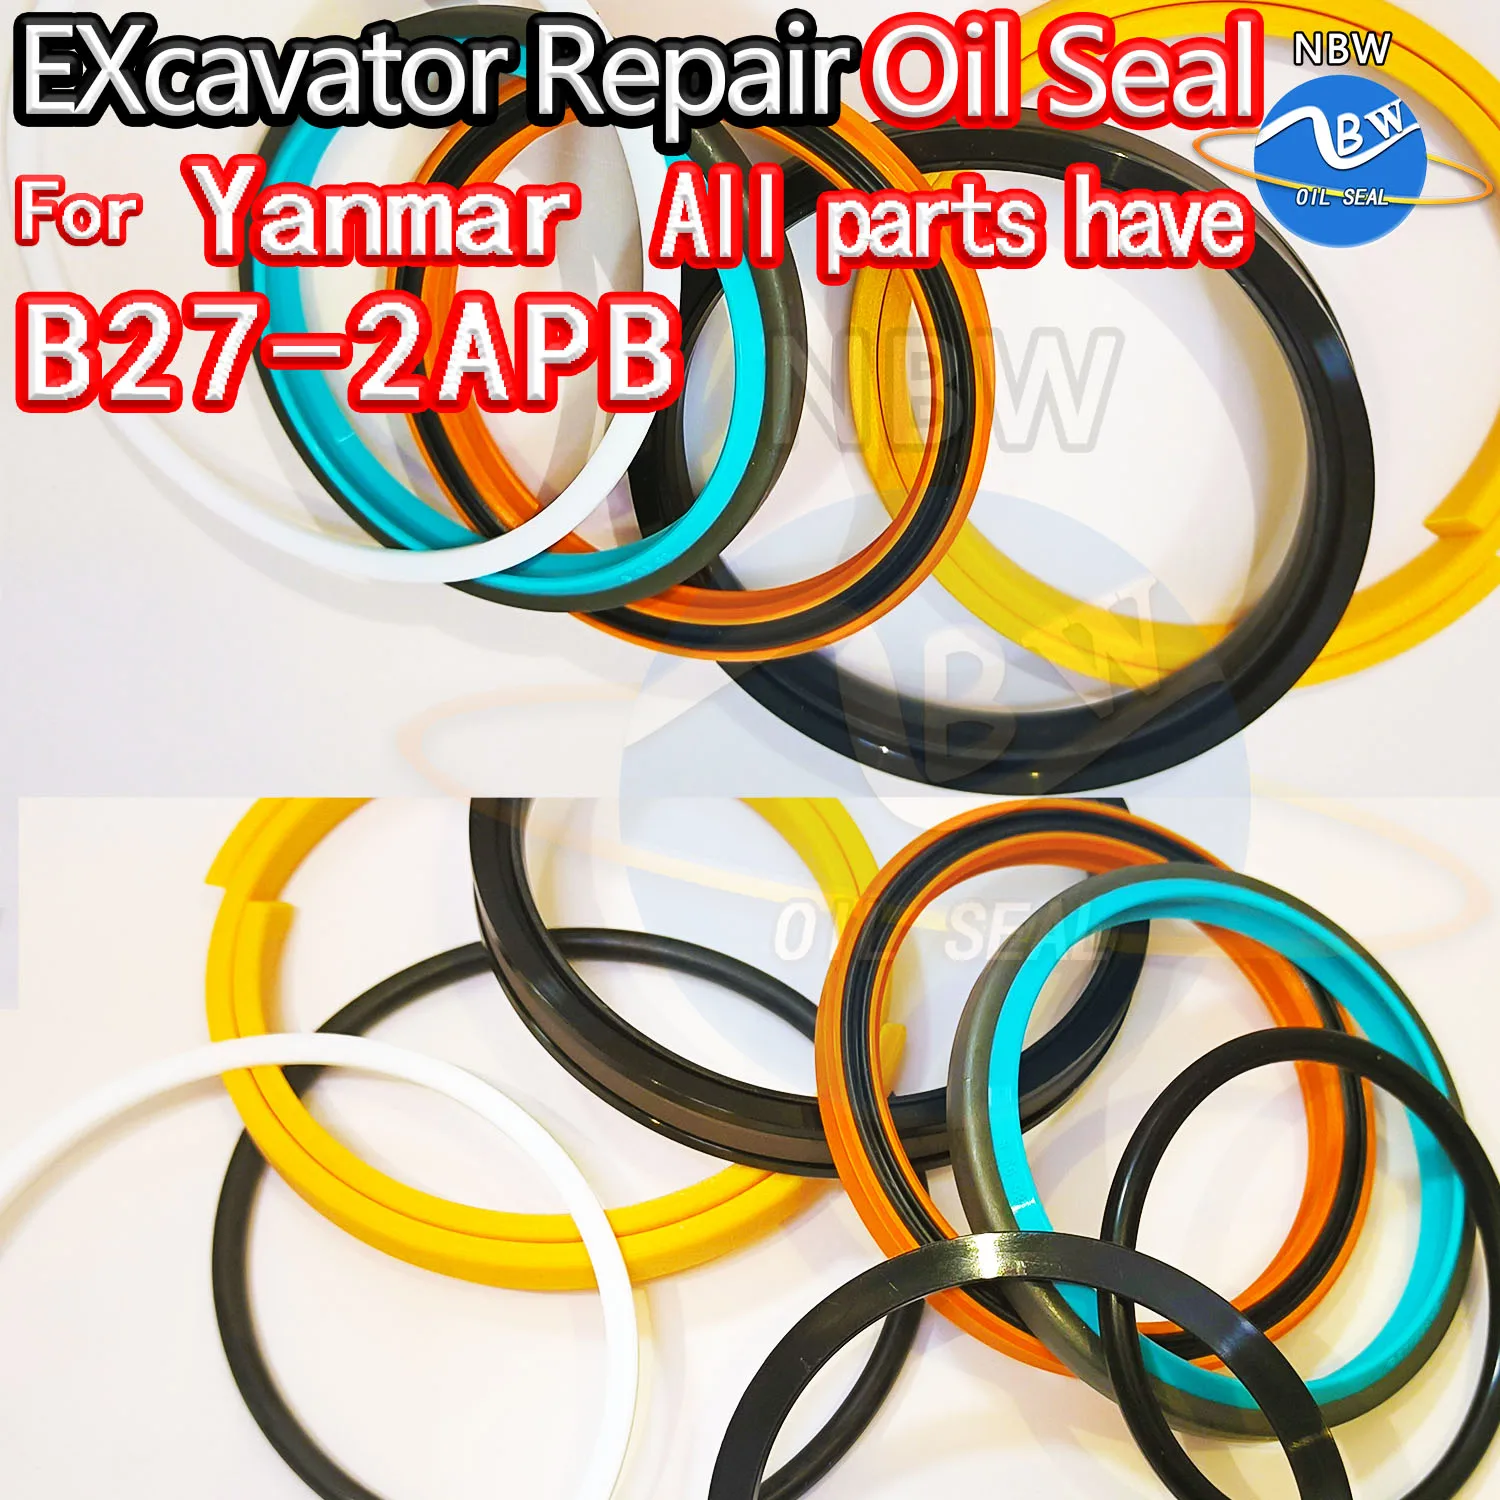 

For Yanmar B27-2APB Excavator Oil Seal Kit High Quality Repair Ya B27 2APB Nitrile NBR Nok Washer Skf Service Orginal Quality